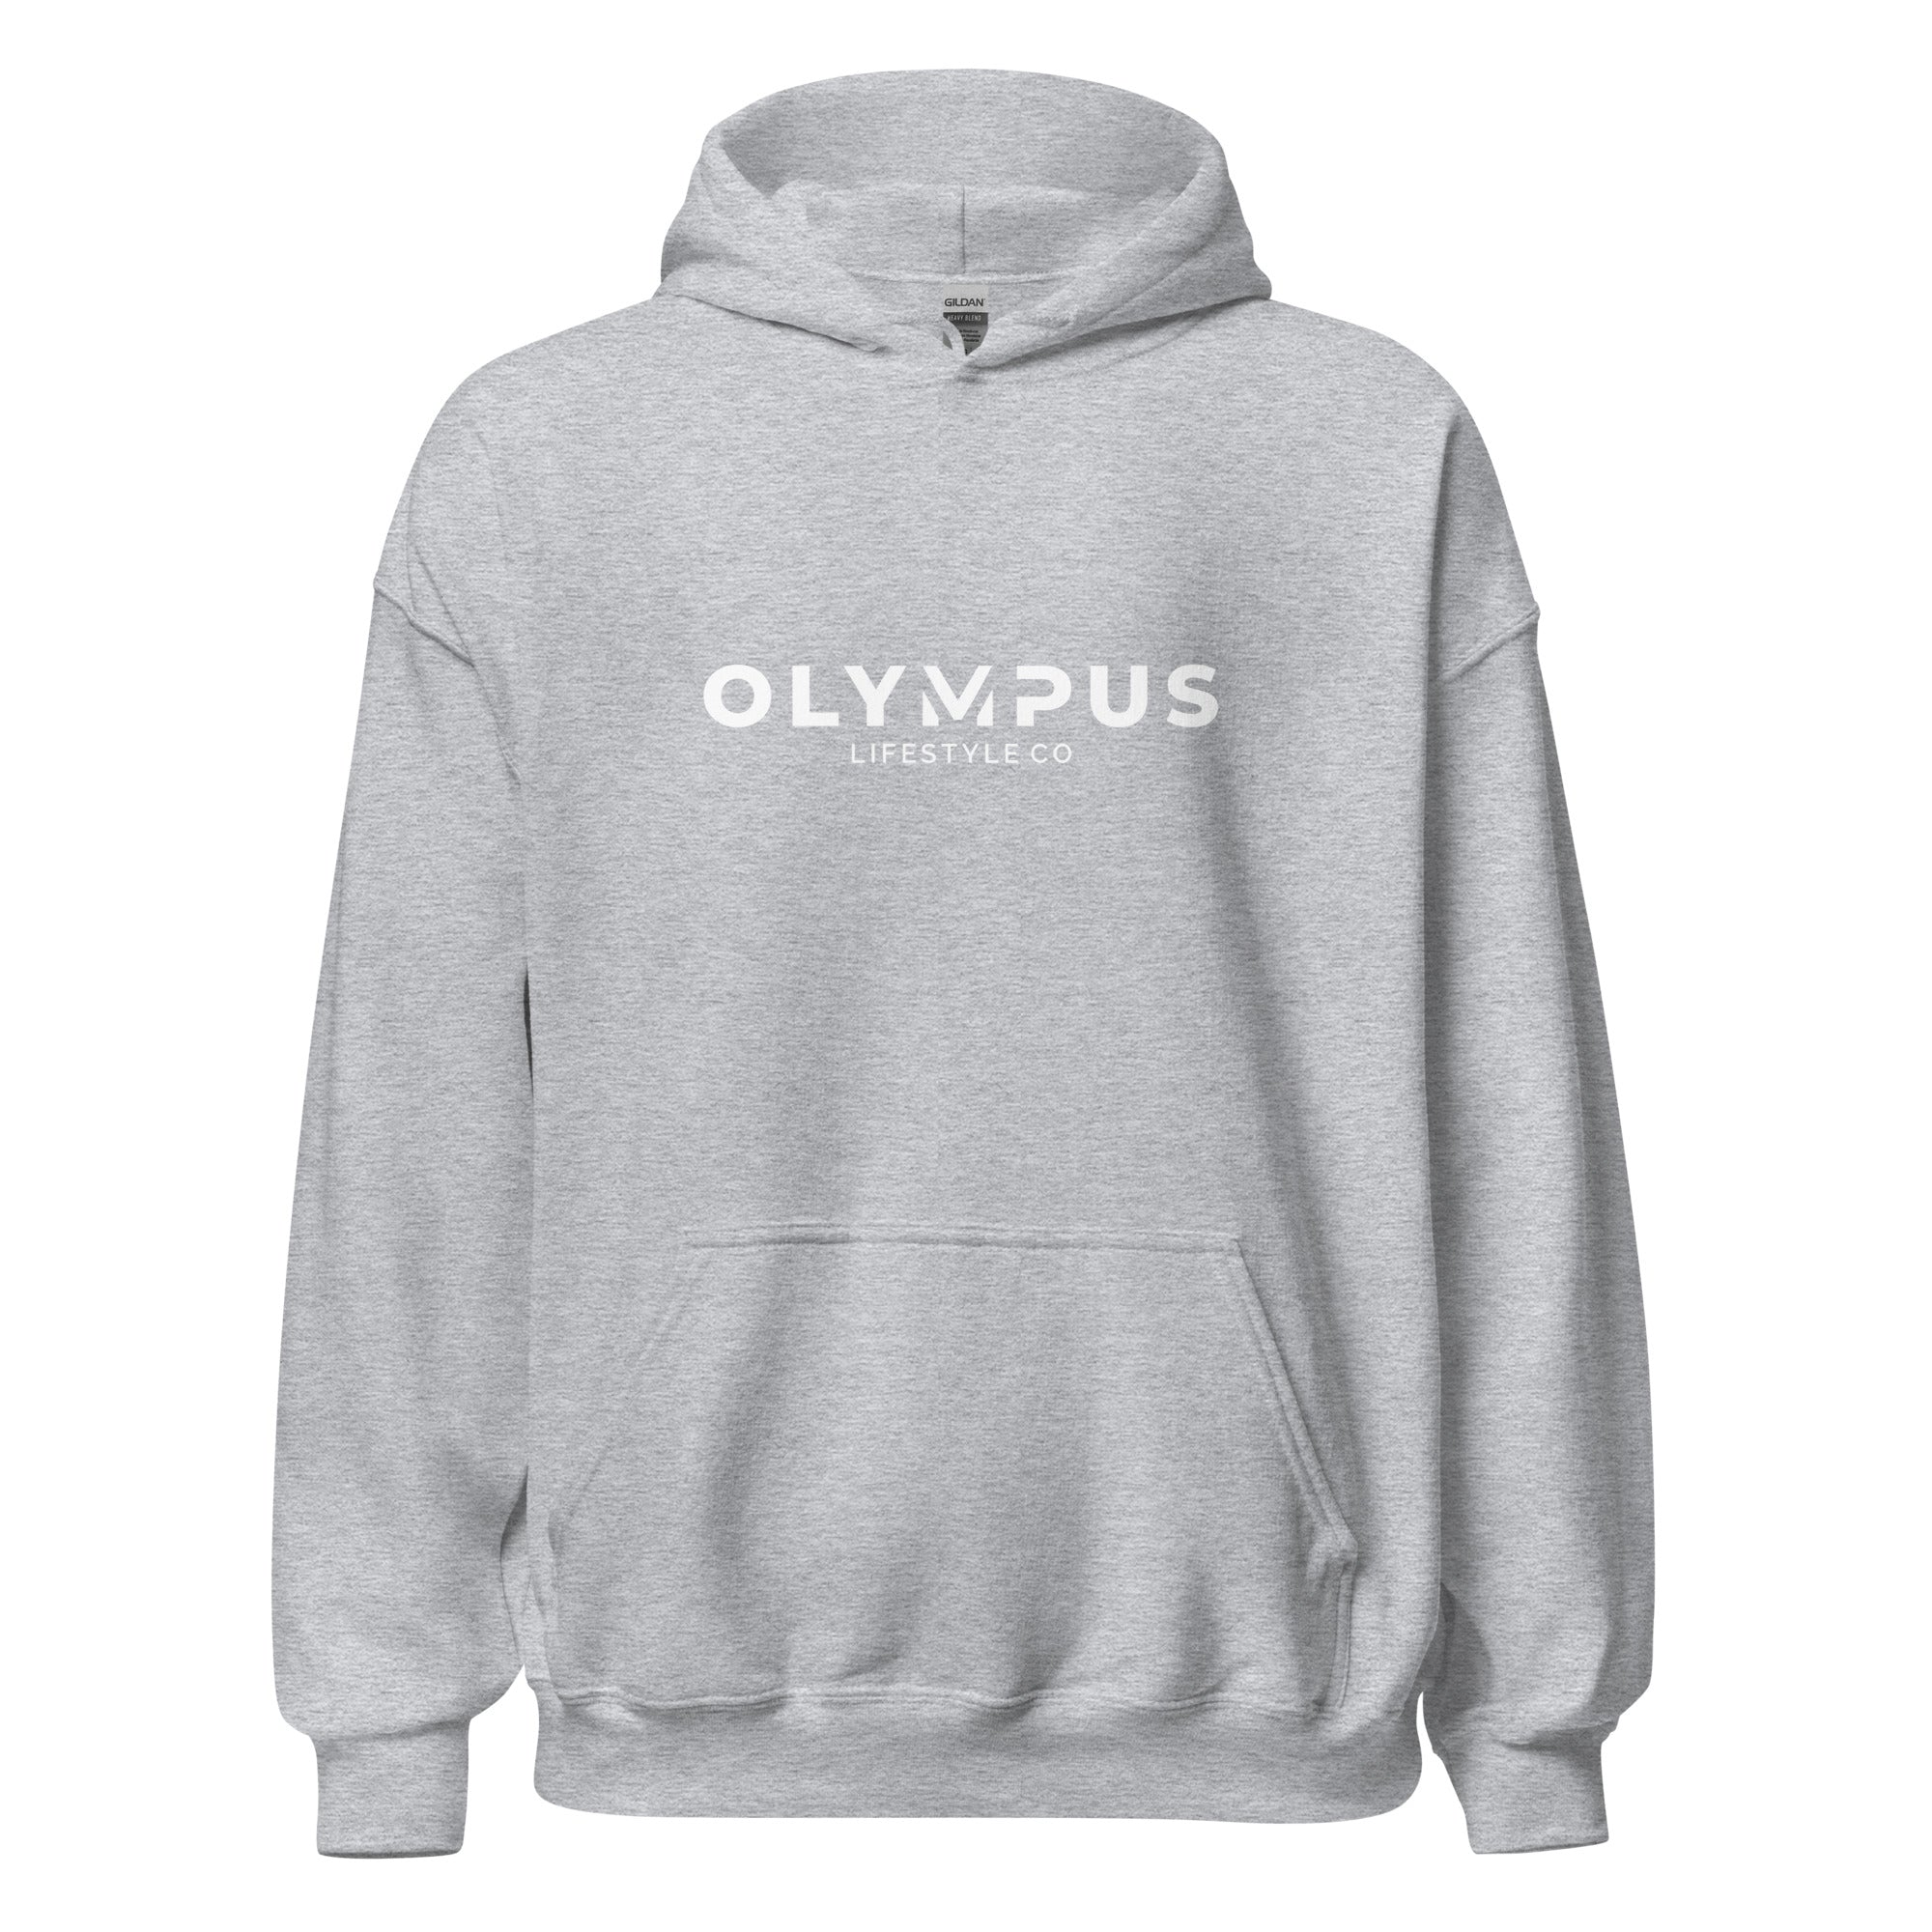 Olympus Men's Printed Hoodie White Text Logo